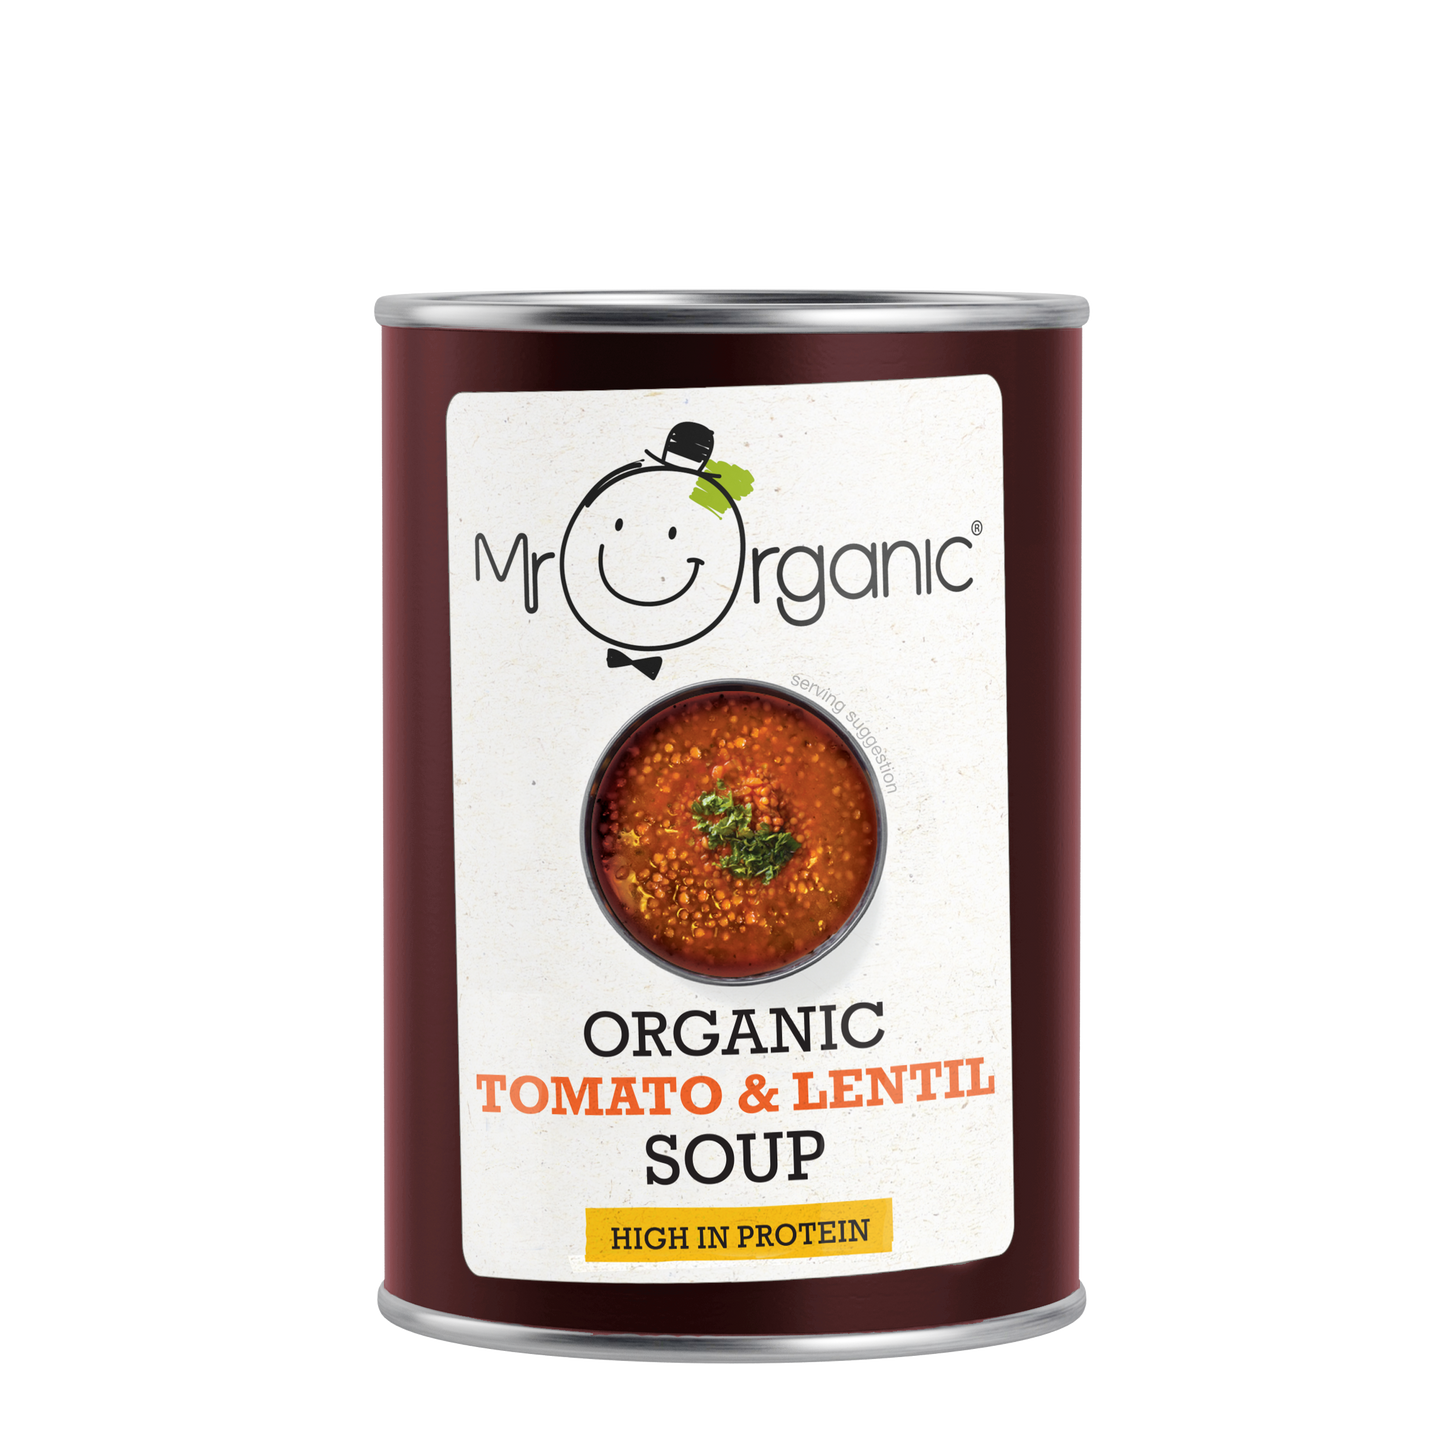 Mr Organic Tomato & Lentil Soup - 400g